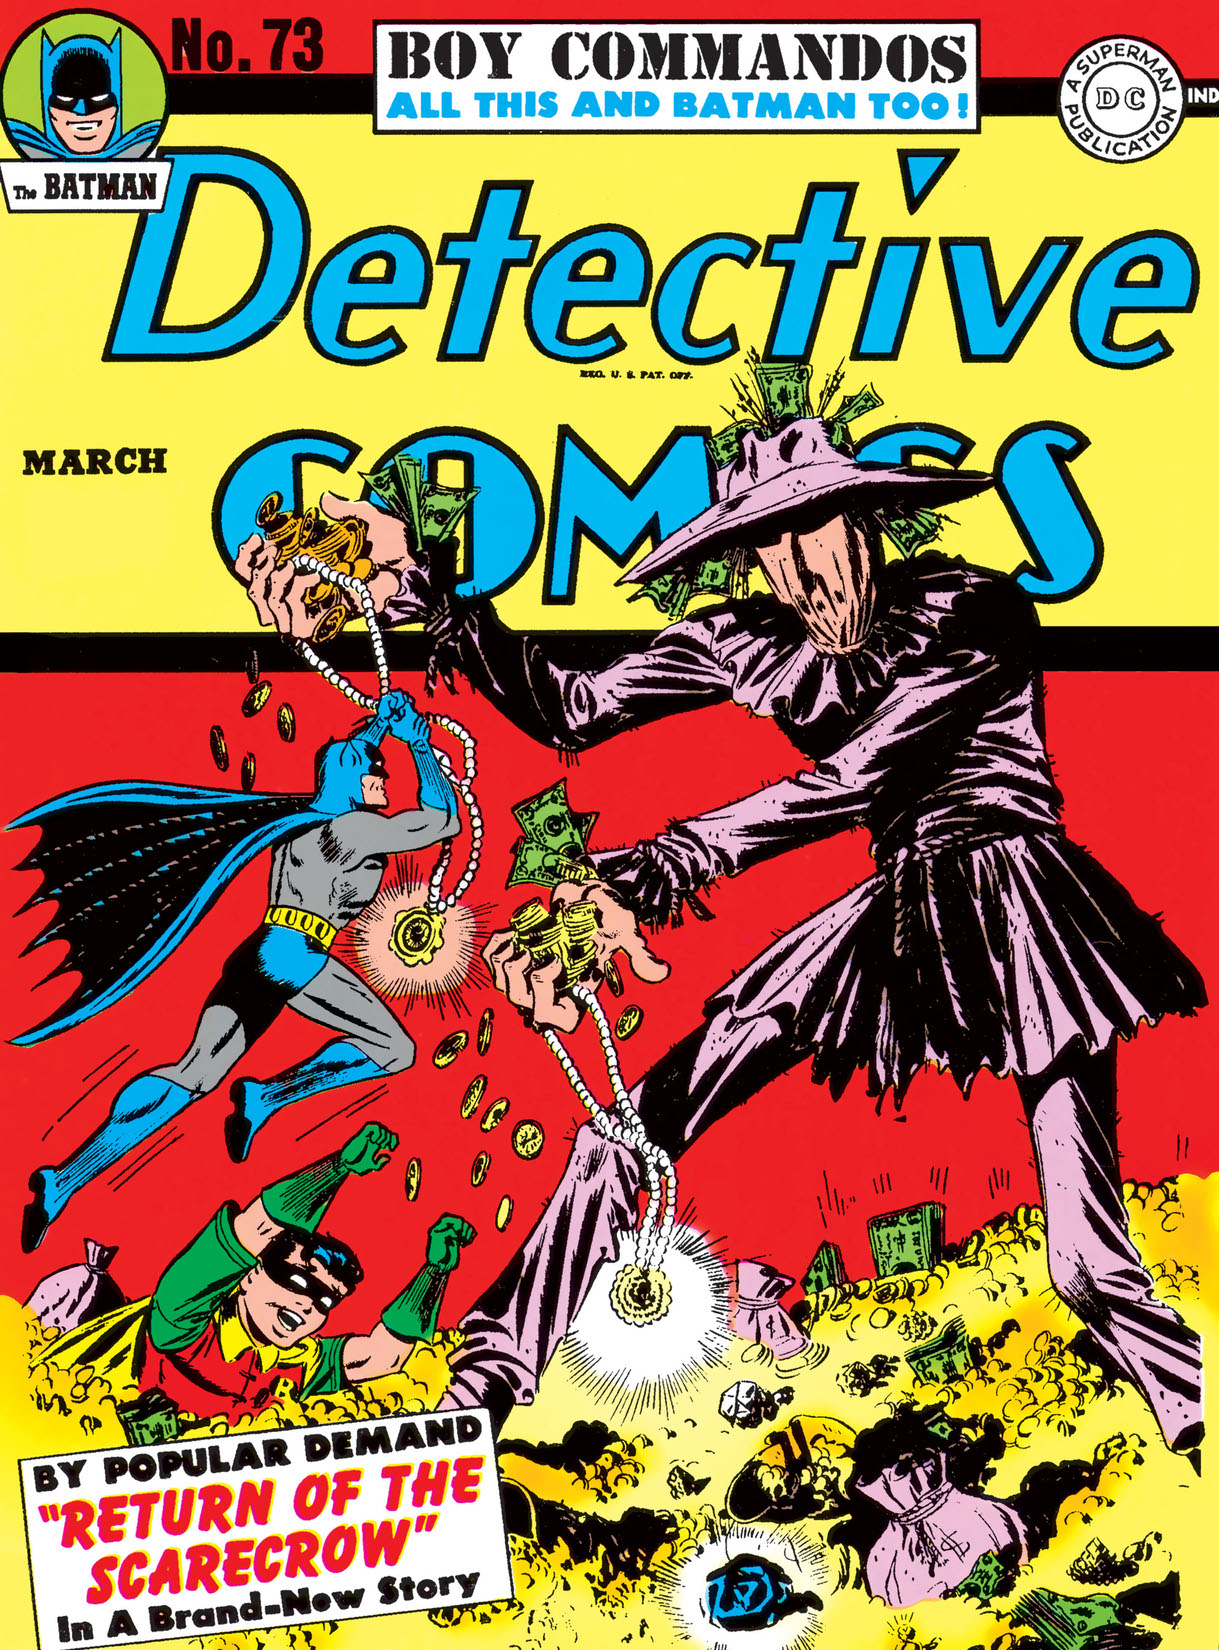 Detective Comics (1942-) #73 preview images